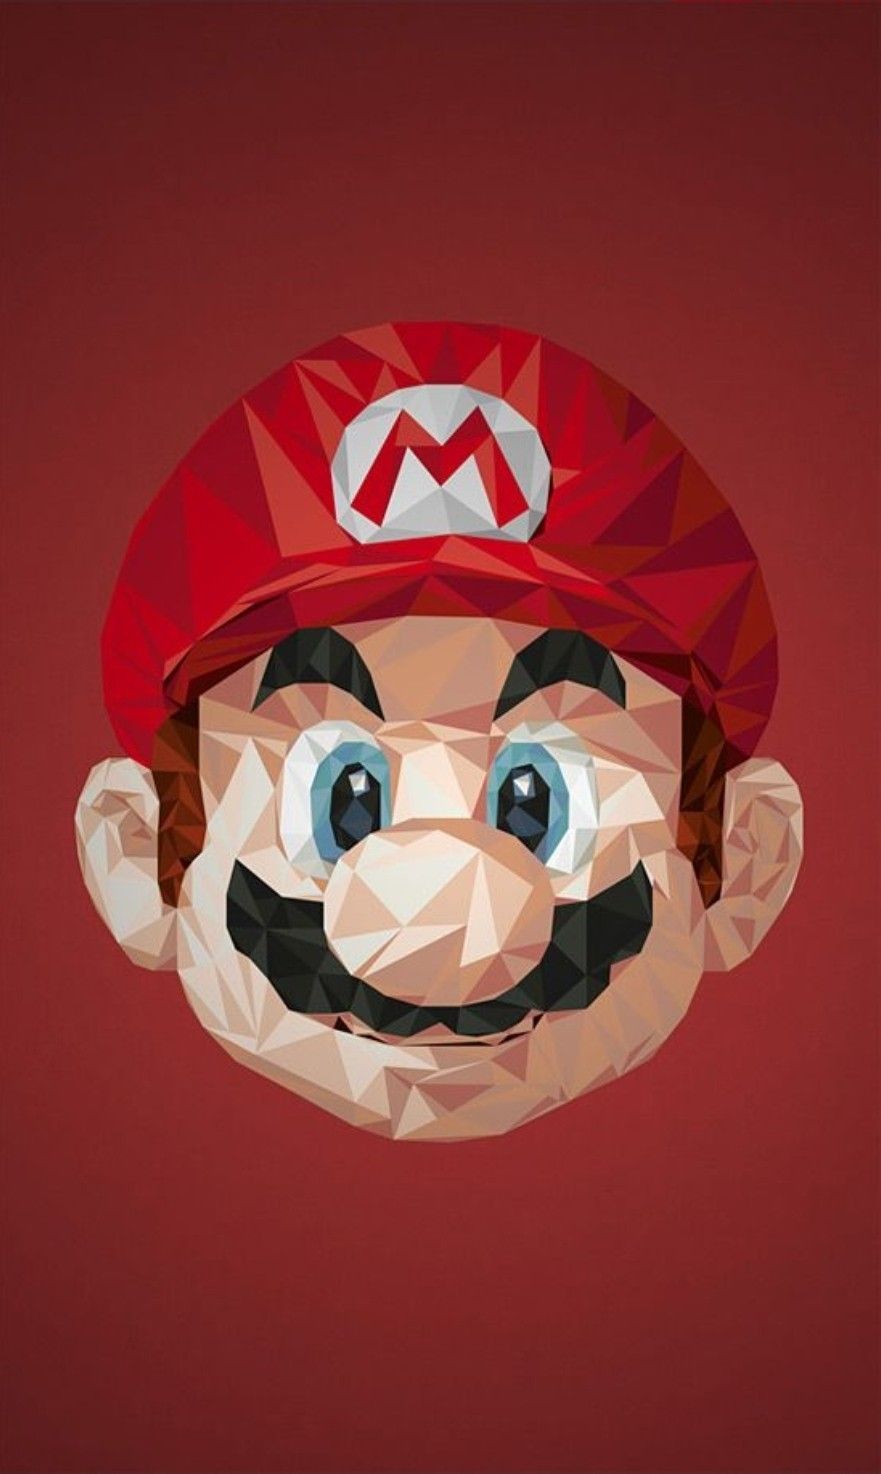 Super Mario Wallpaper by Mr.Torres (Ayoze Torres). Mario art, Mario bros, Game character